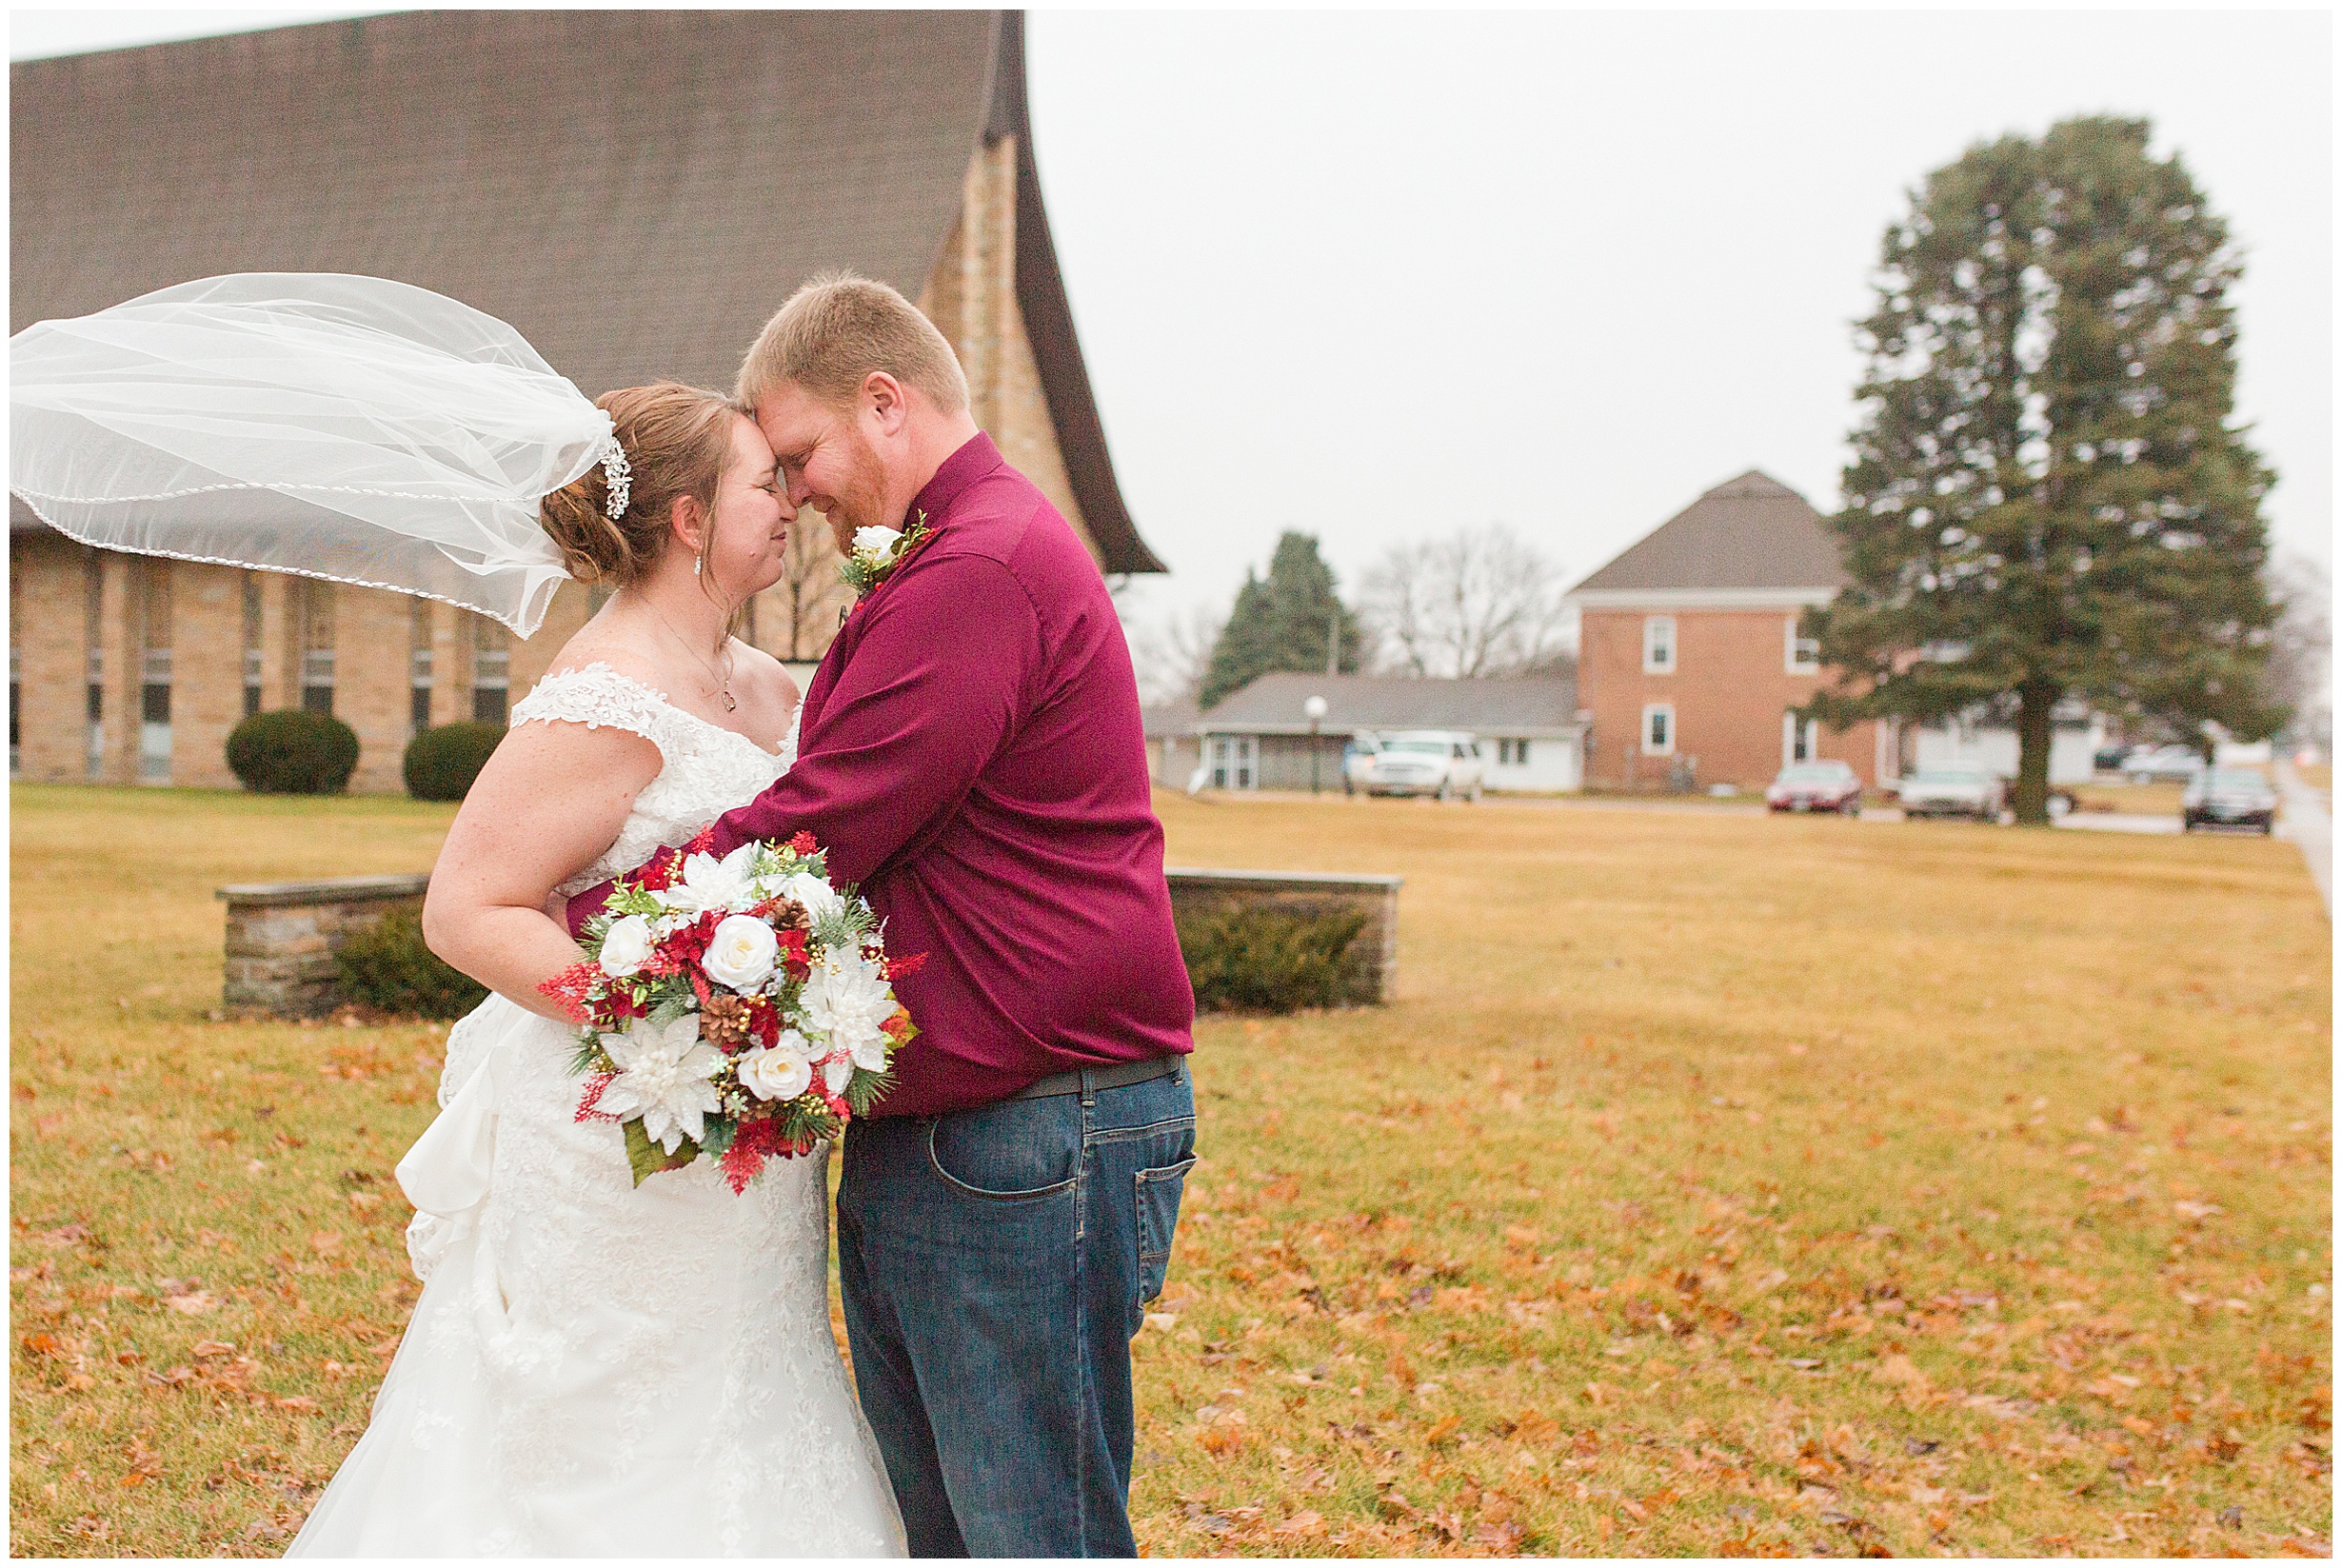 Iowa City Photographers - Iowa Winter Wedding -Megan Snitker Photography_0044.jpg